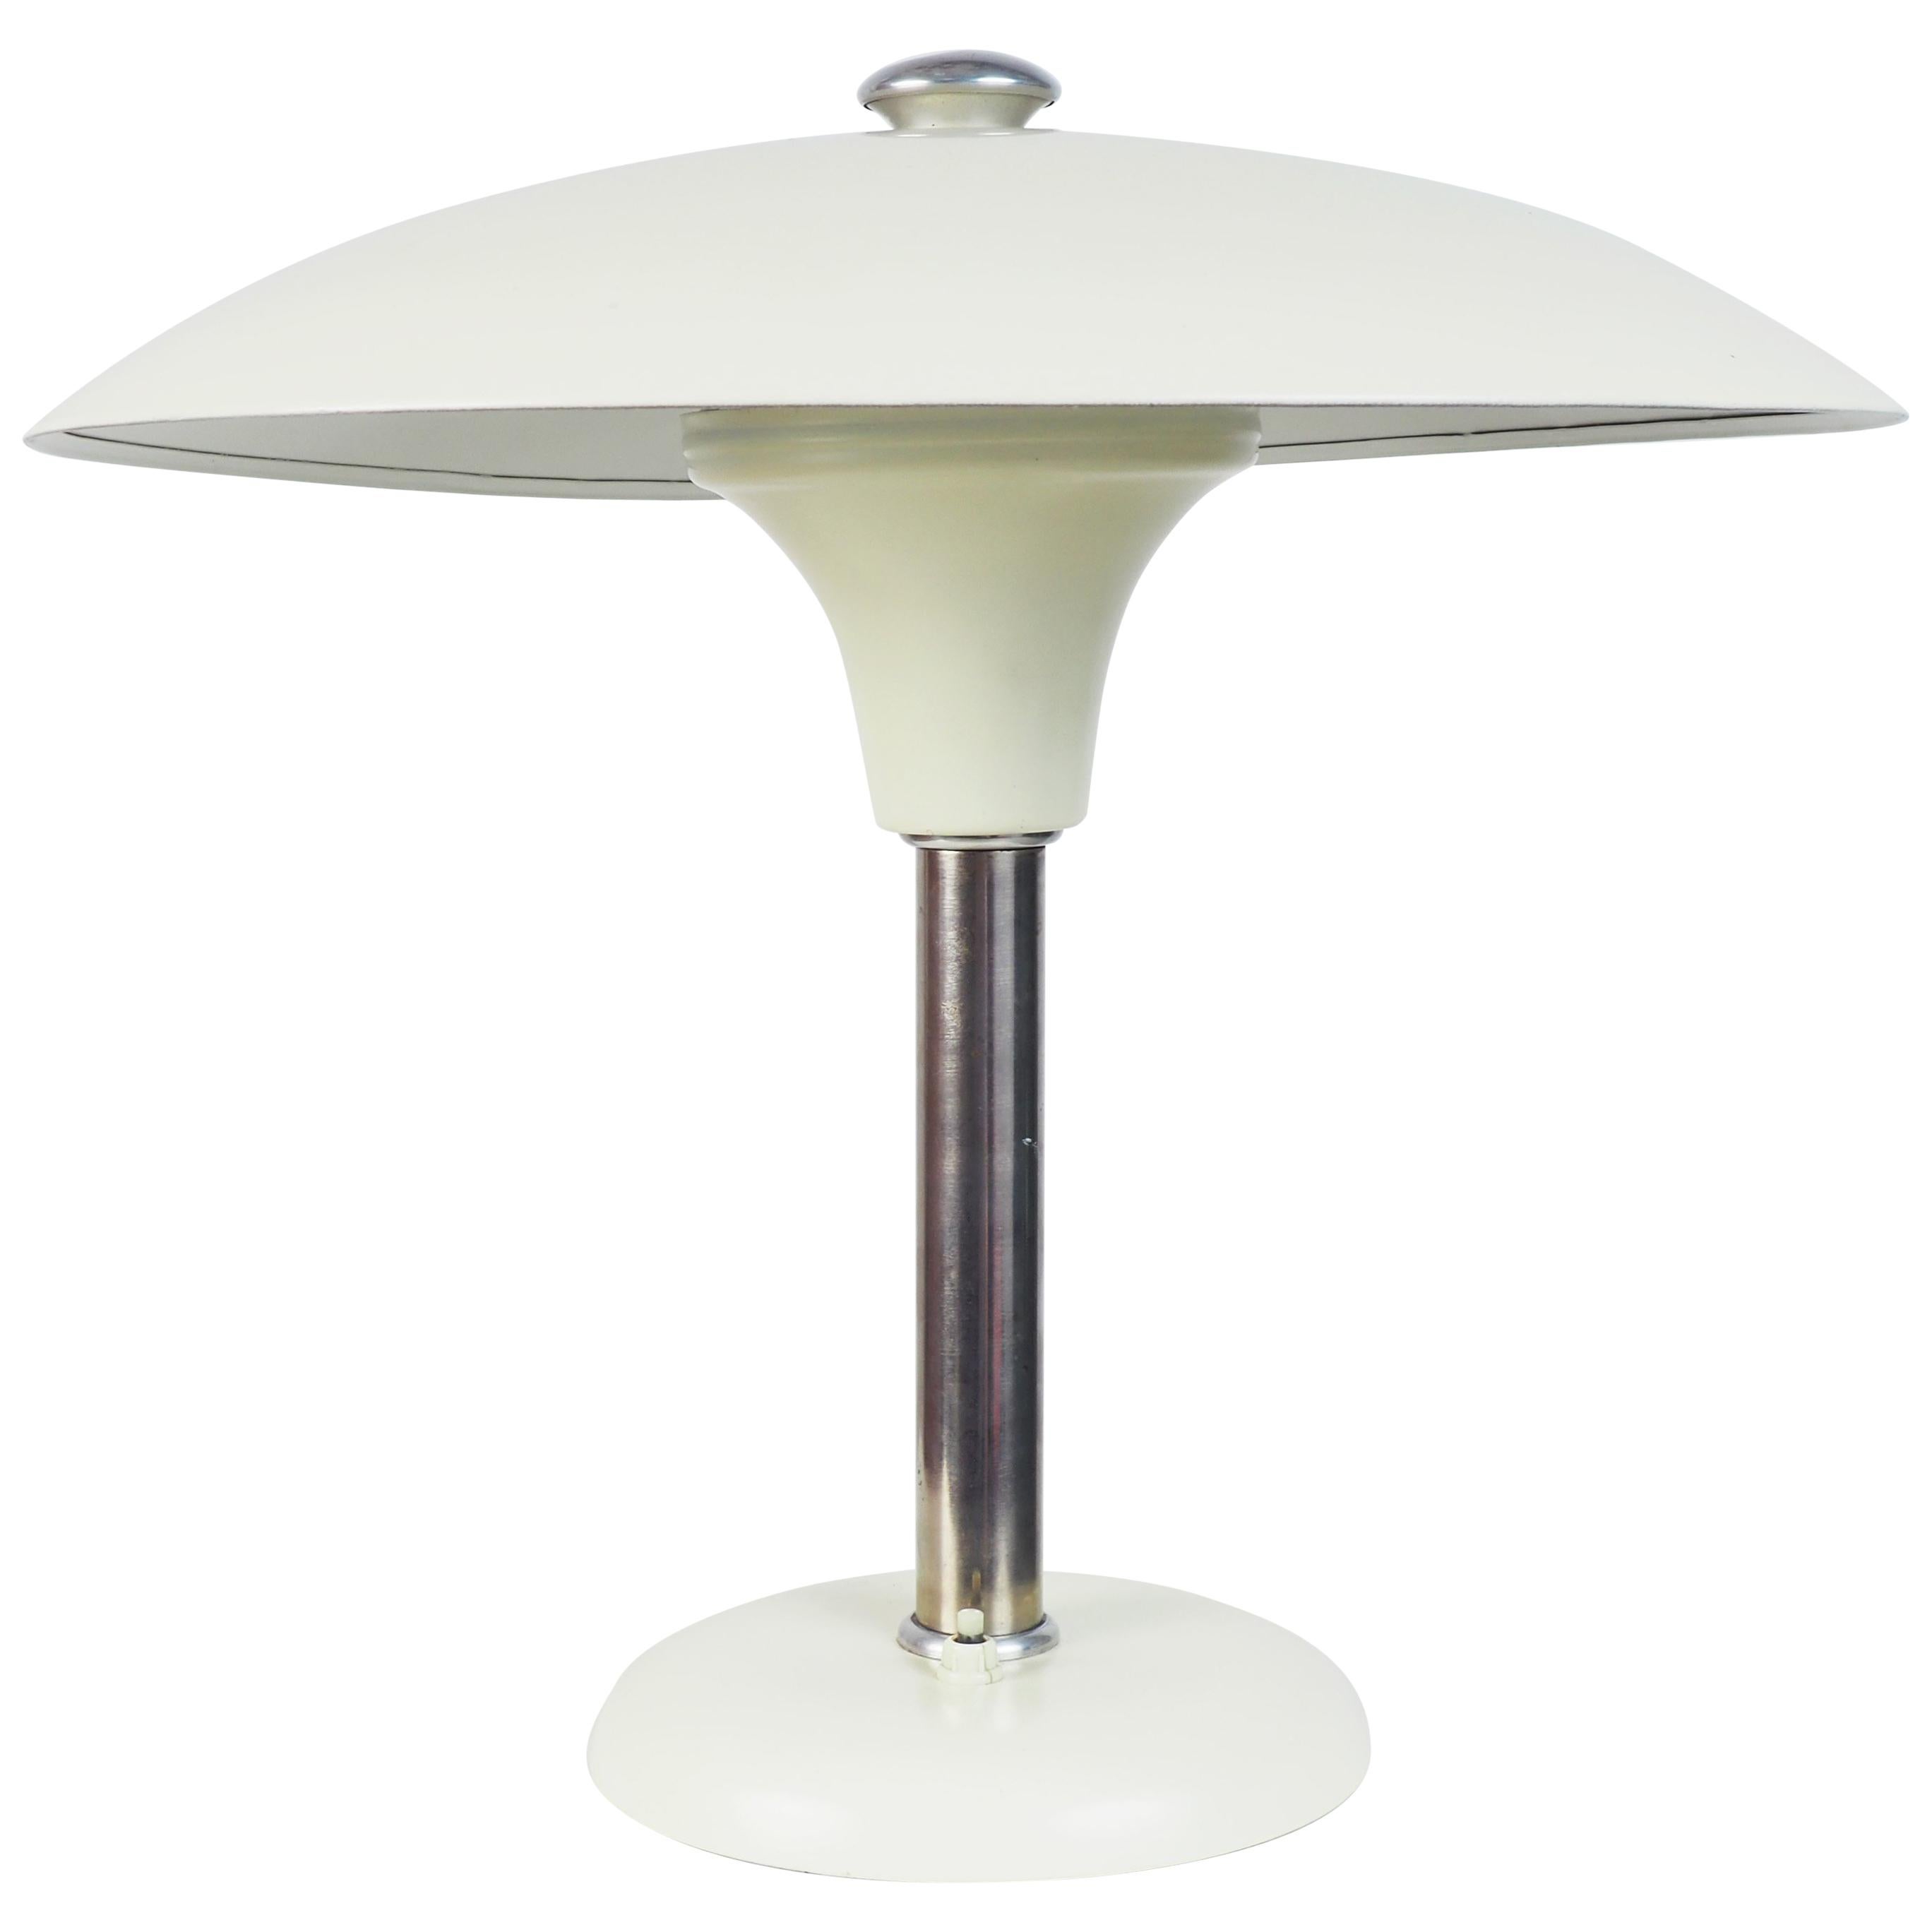 Bauhaus Table Lamp Designed by Max Schumacher